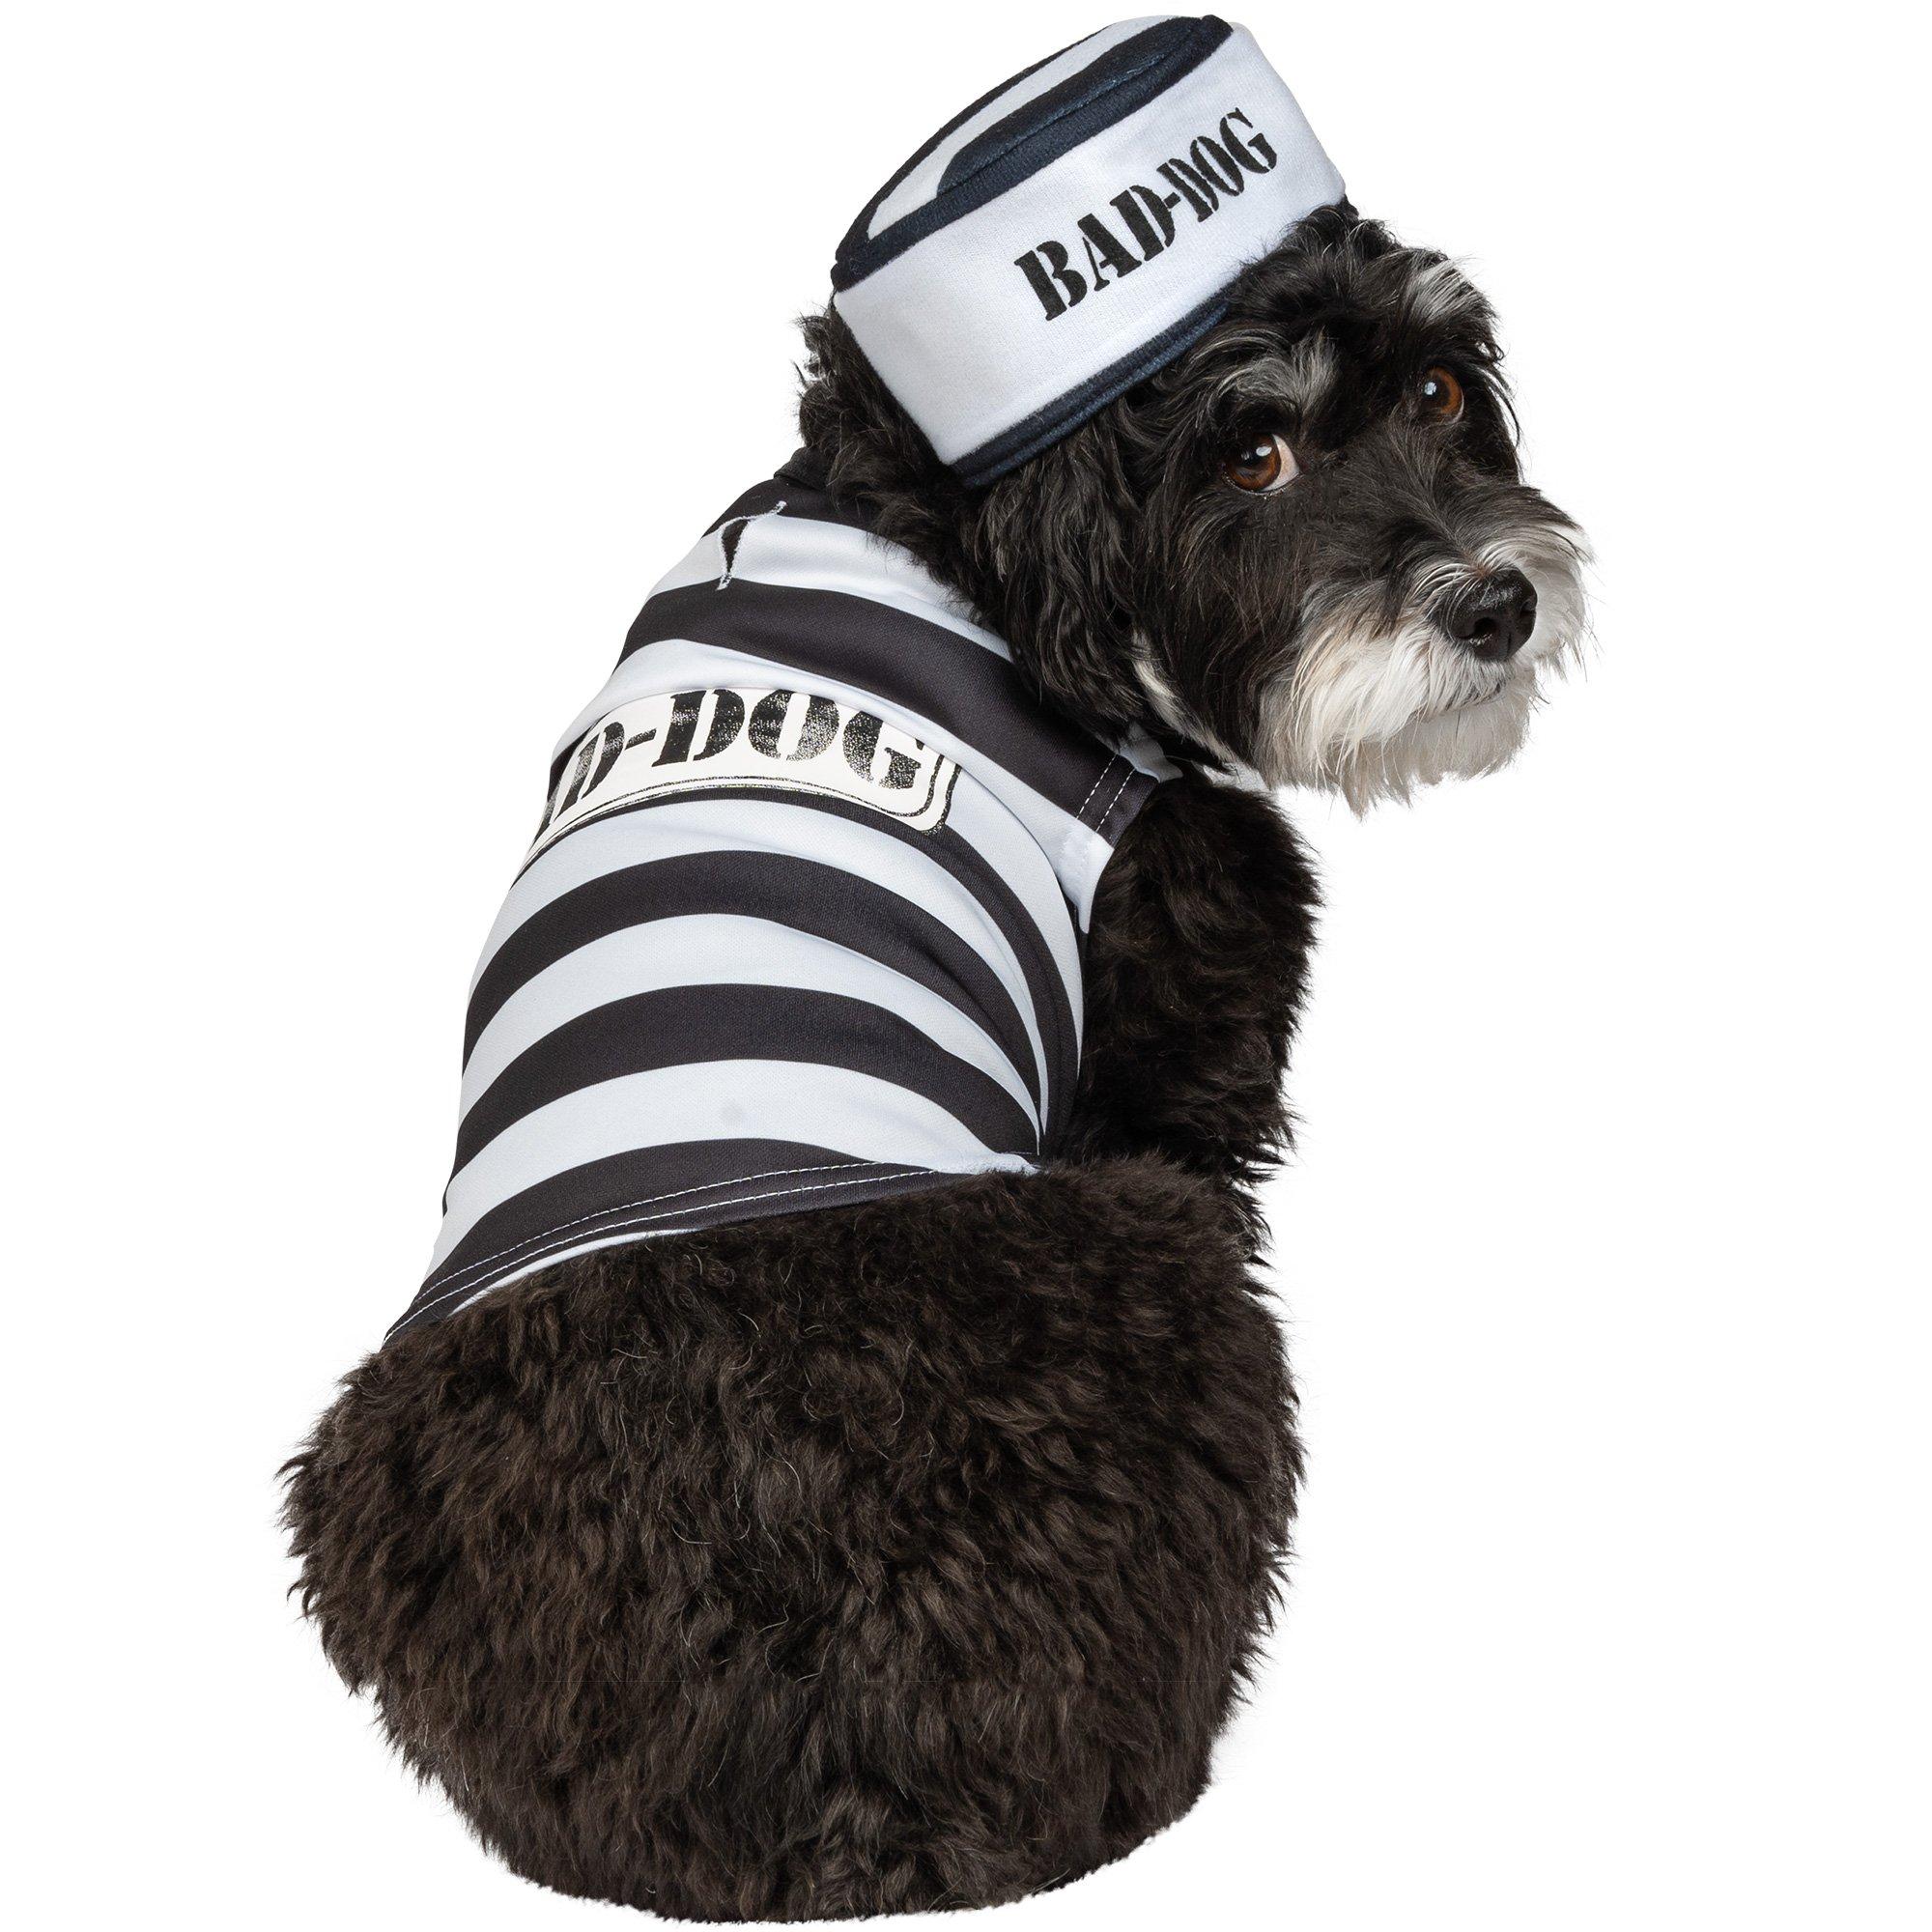 Kids Jailbird Dog Costume - Size M/L | Halloween Store | Halloween Cos